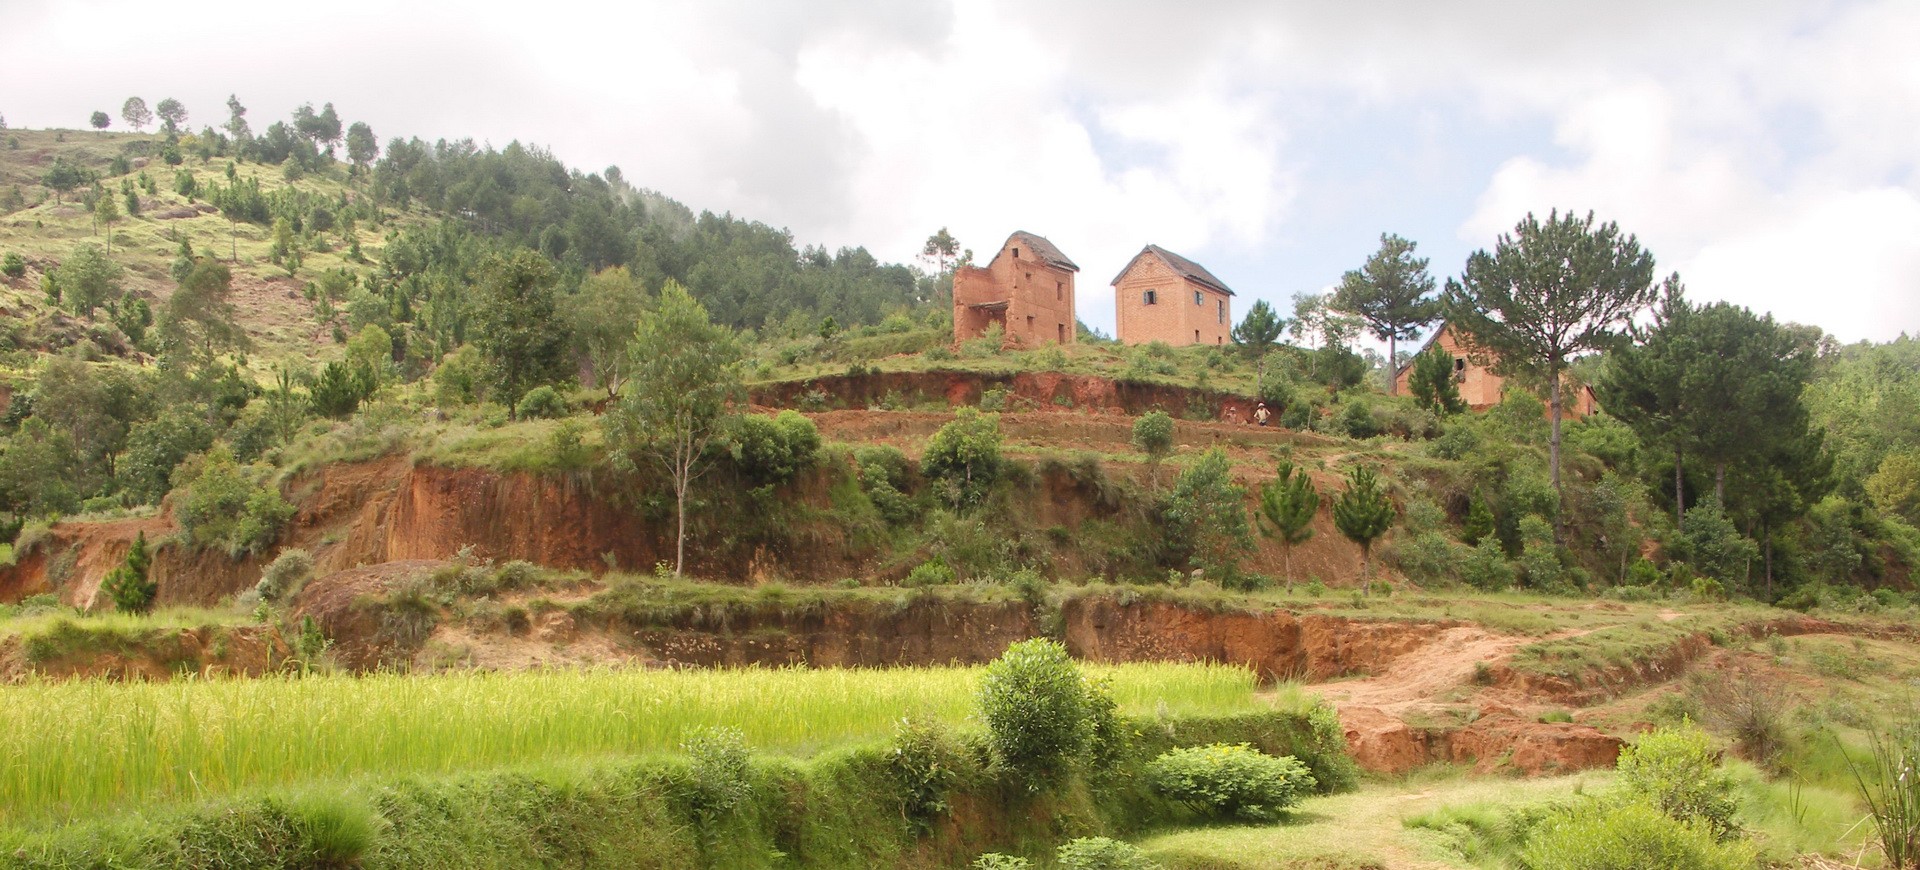 Madagascar Village des hautes terres